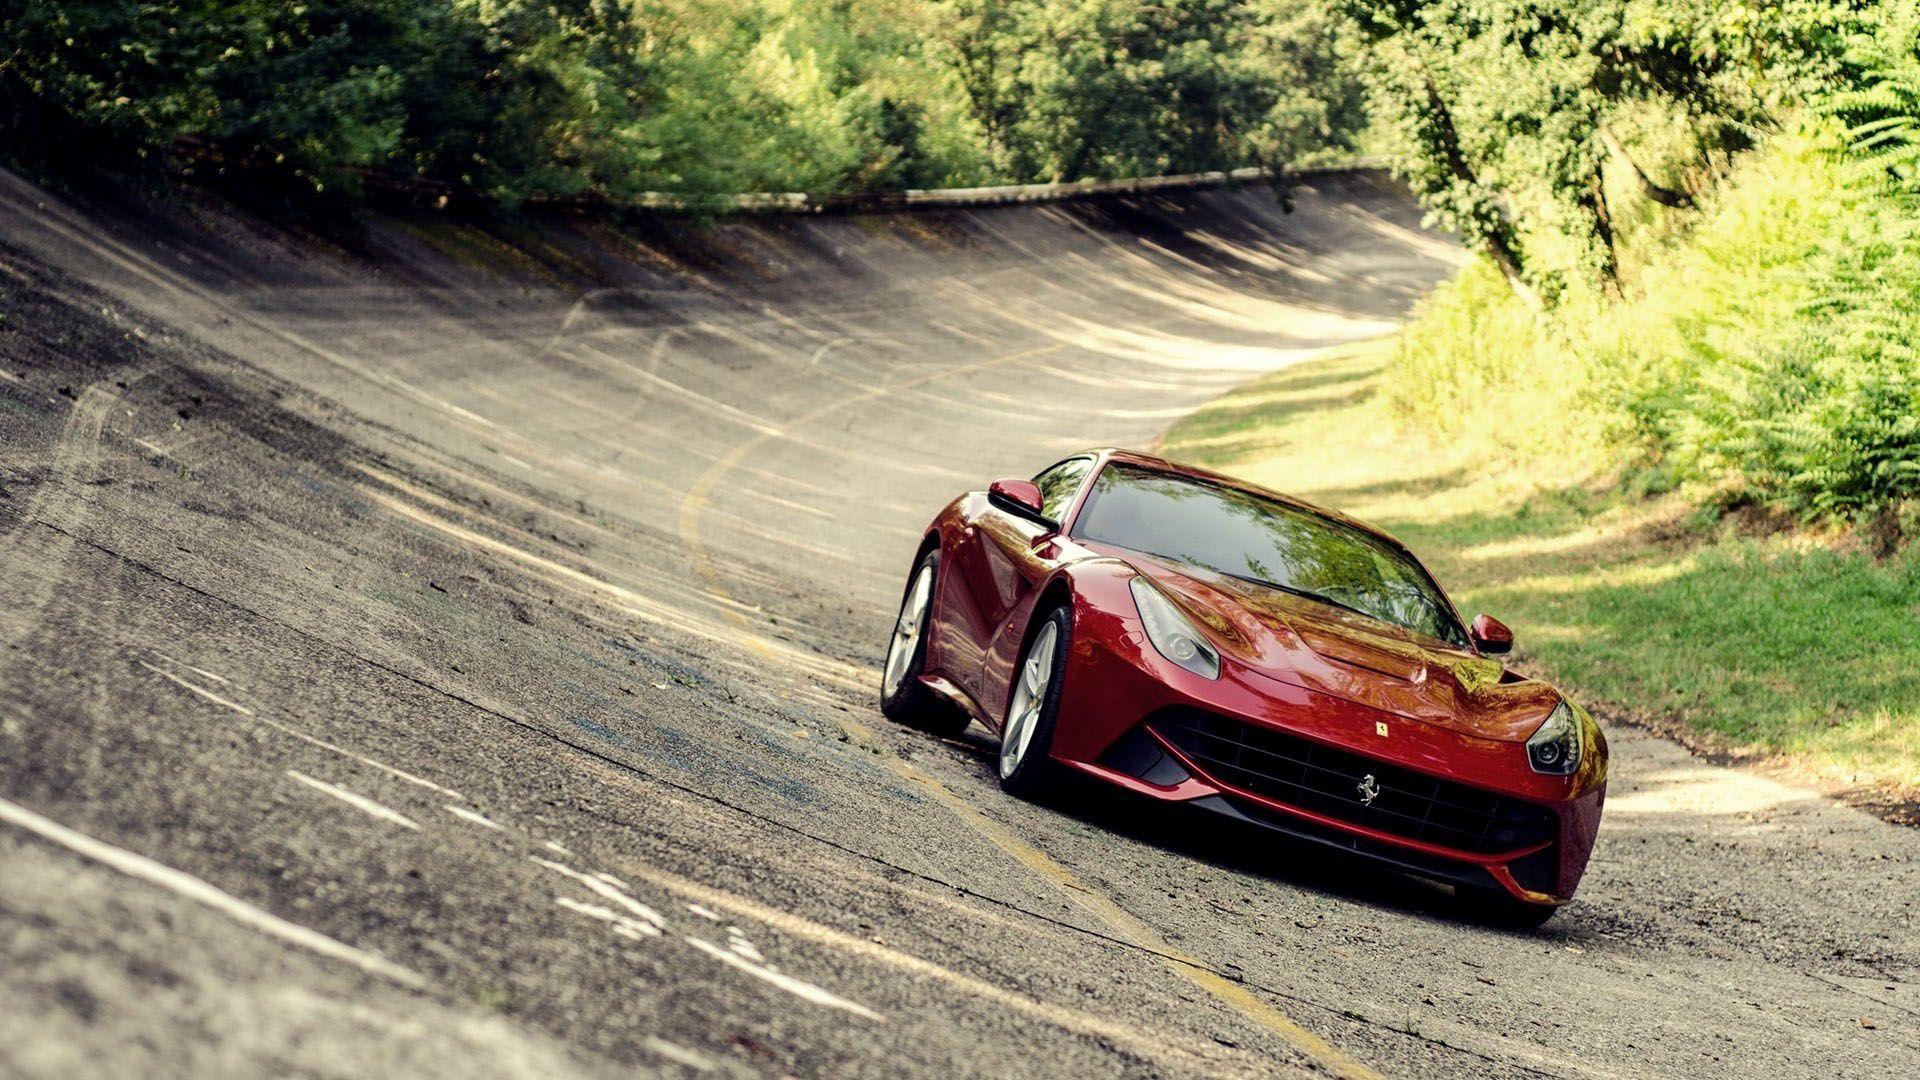 Ferrari f12 berlinetta HD wallpapers high resolution download